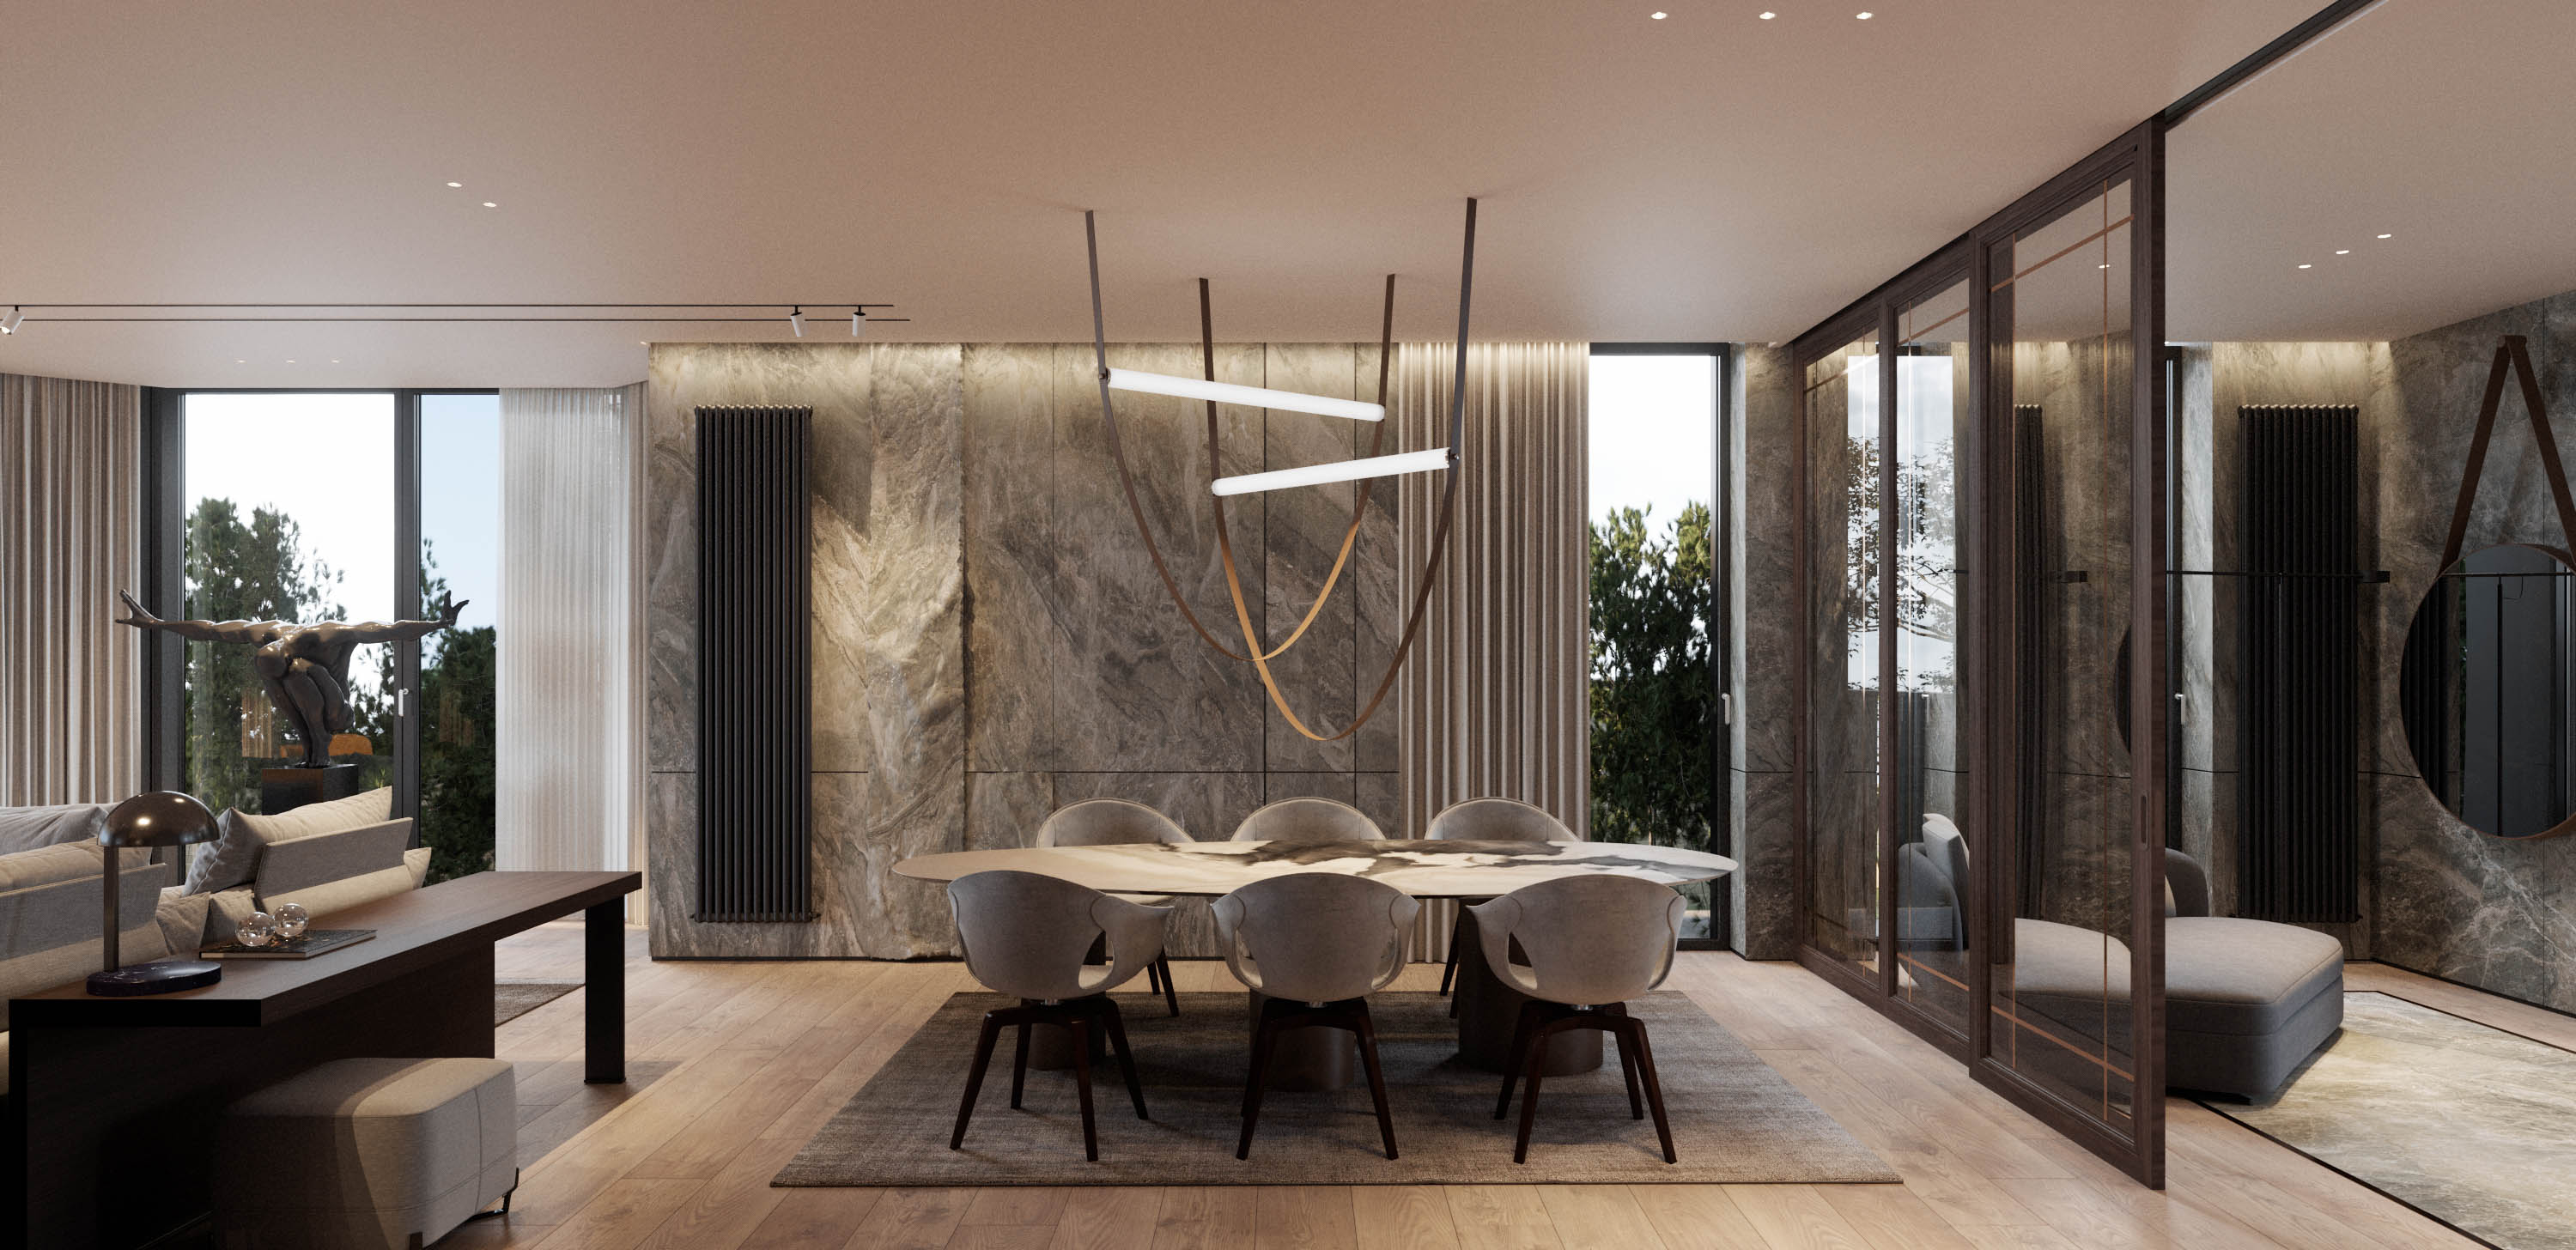 Luxury House Lake Snagov - interior design Hype Project - dining Poliform (1)